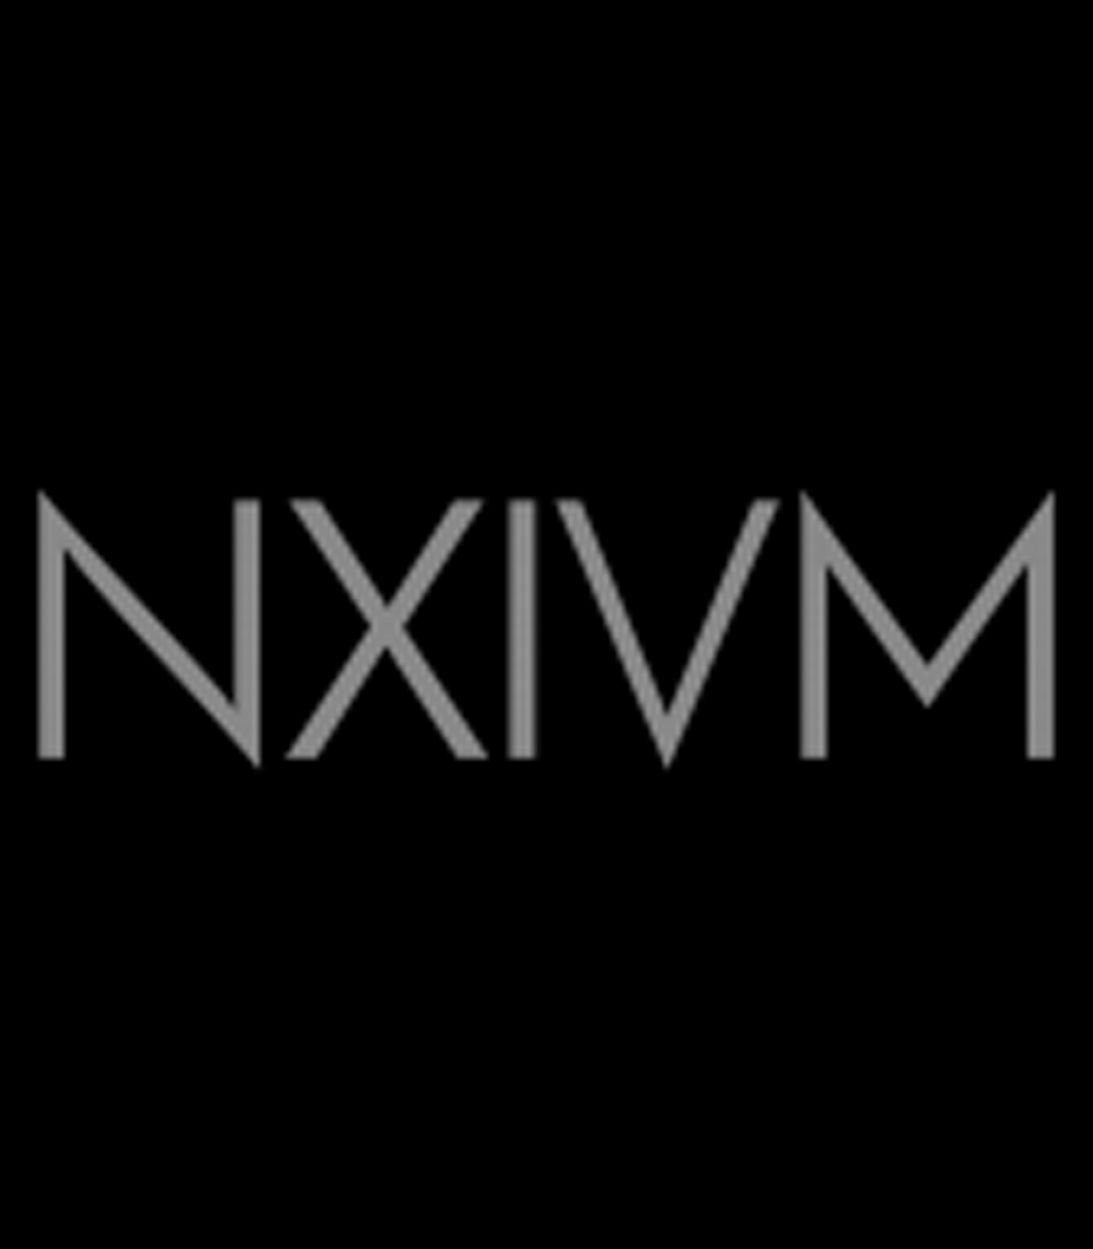 NXIVM logo Vertical